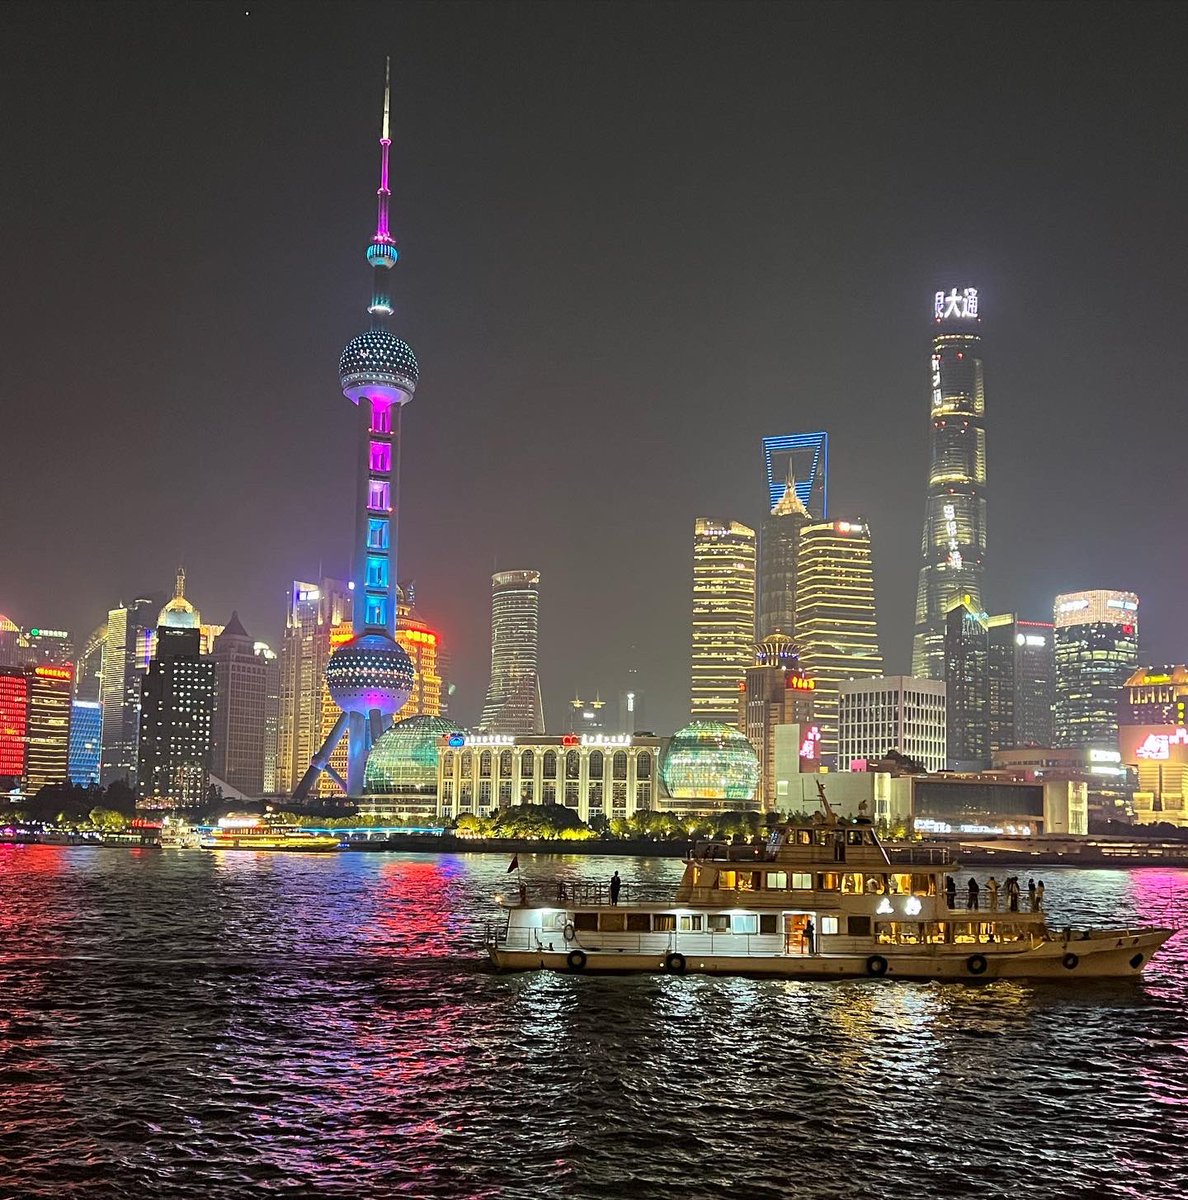 City night walk in Shanghai ❤️1

#shanghai #china #nightwalks #walk #shanghailife